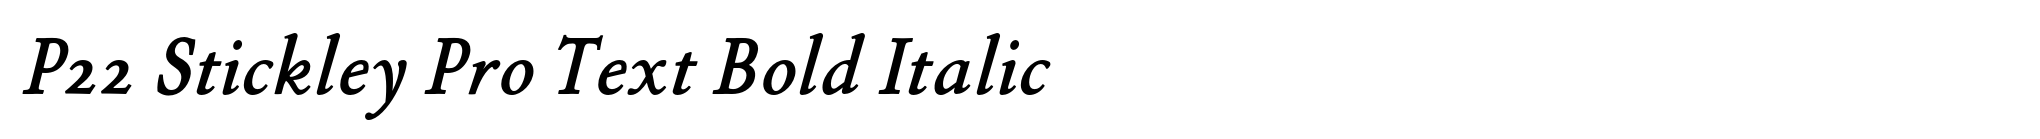 P22 Stickley Pro Text Bold Italic image